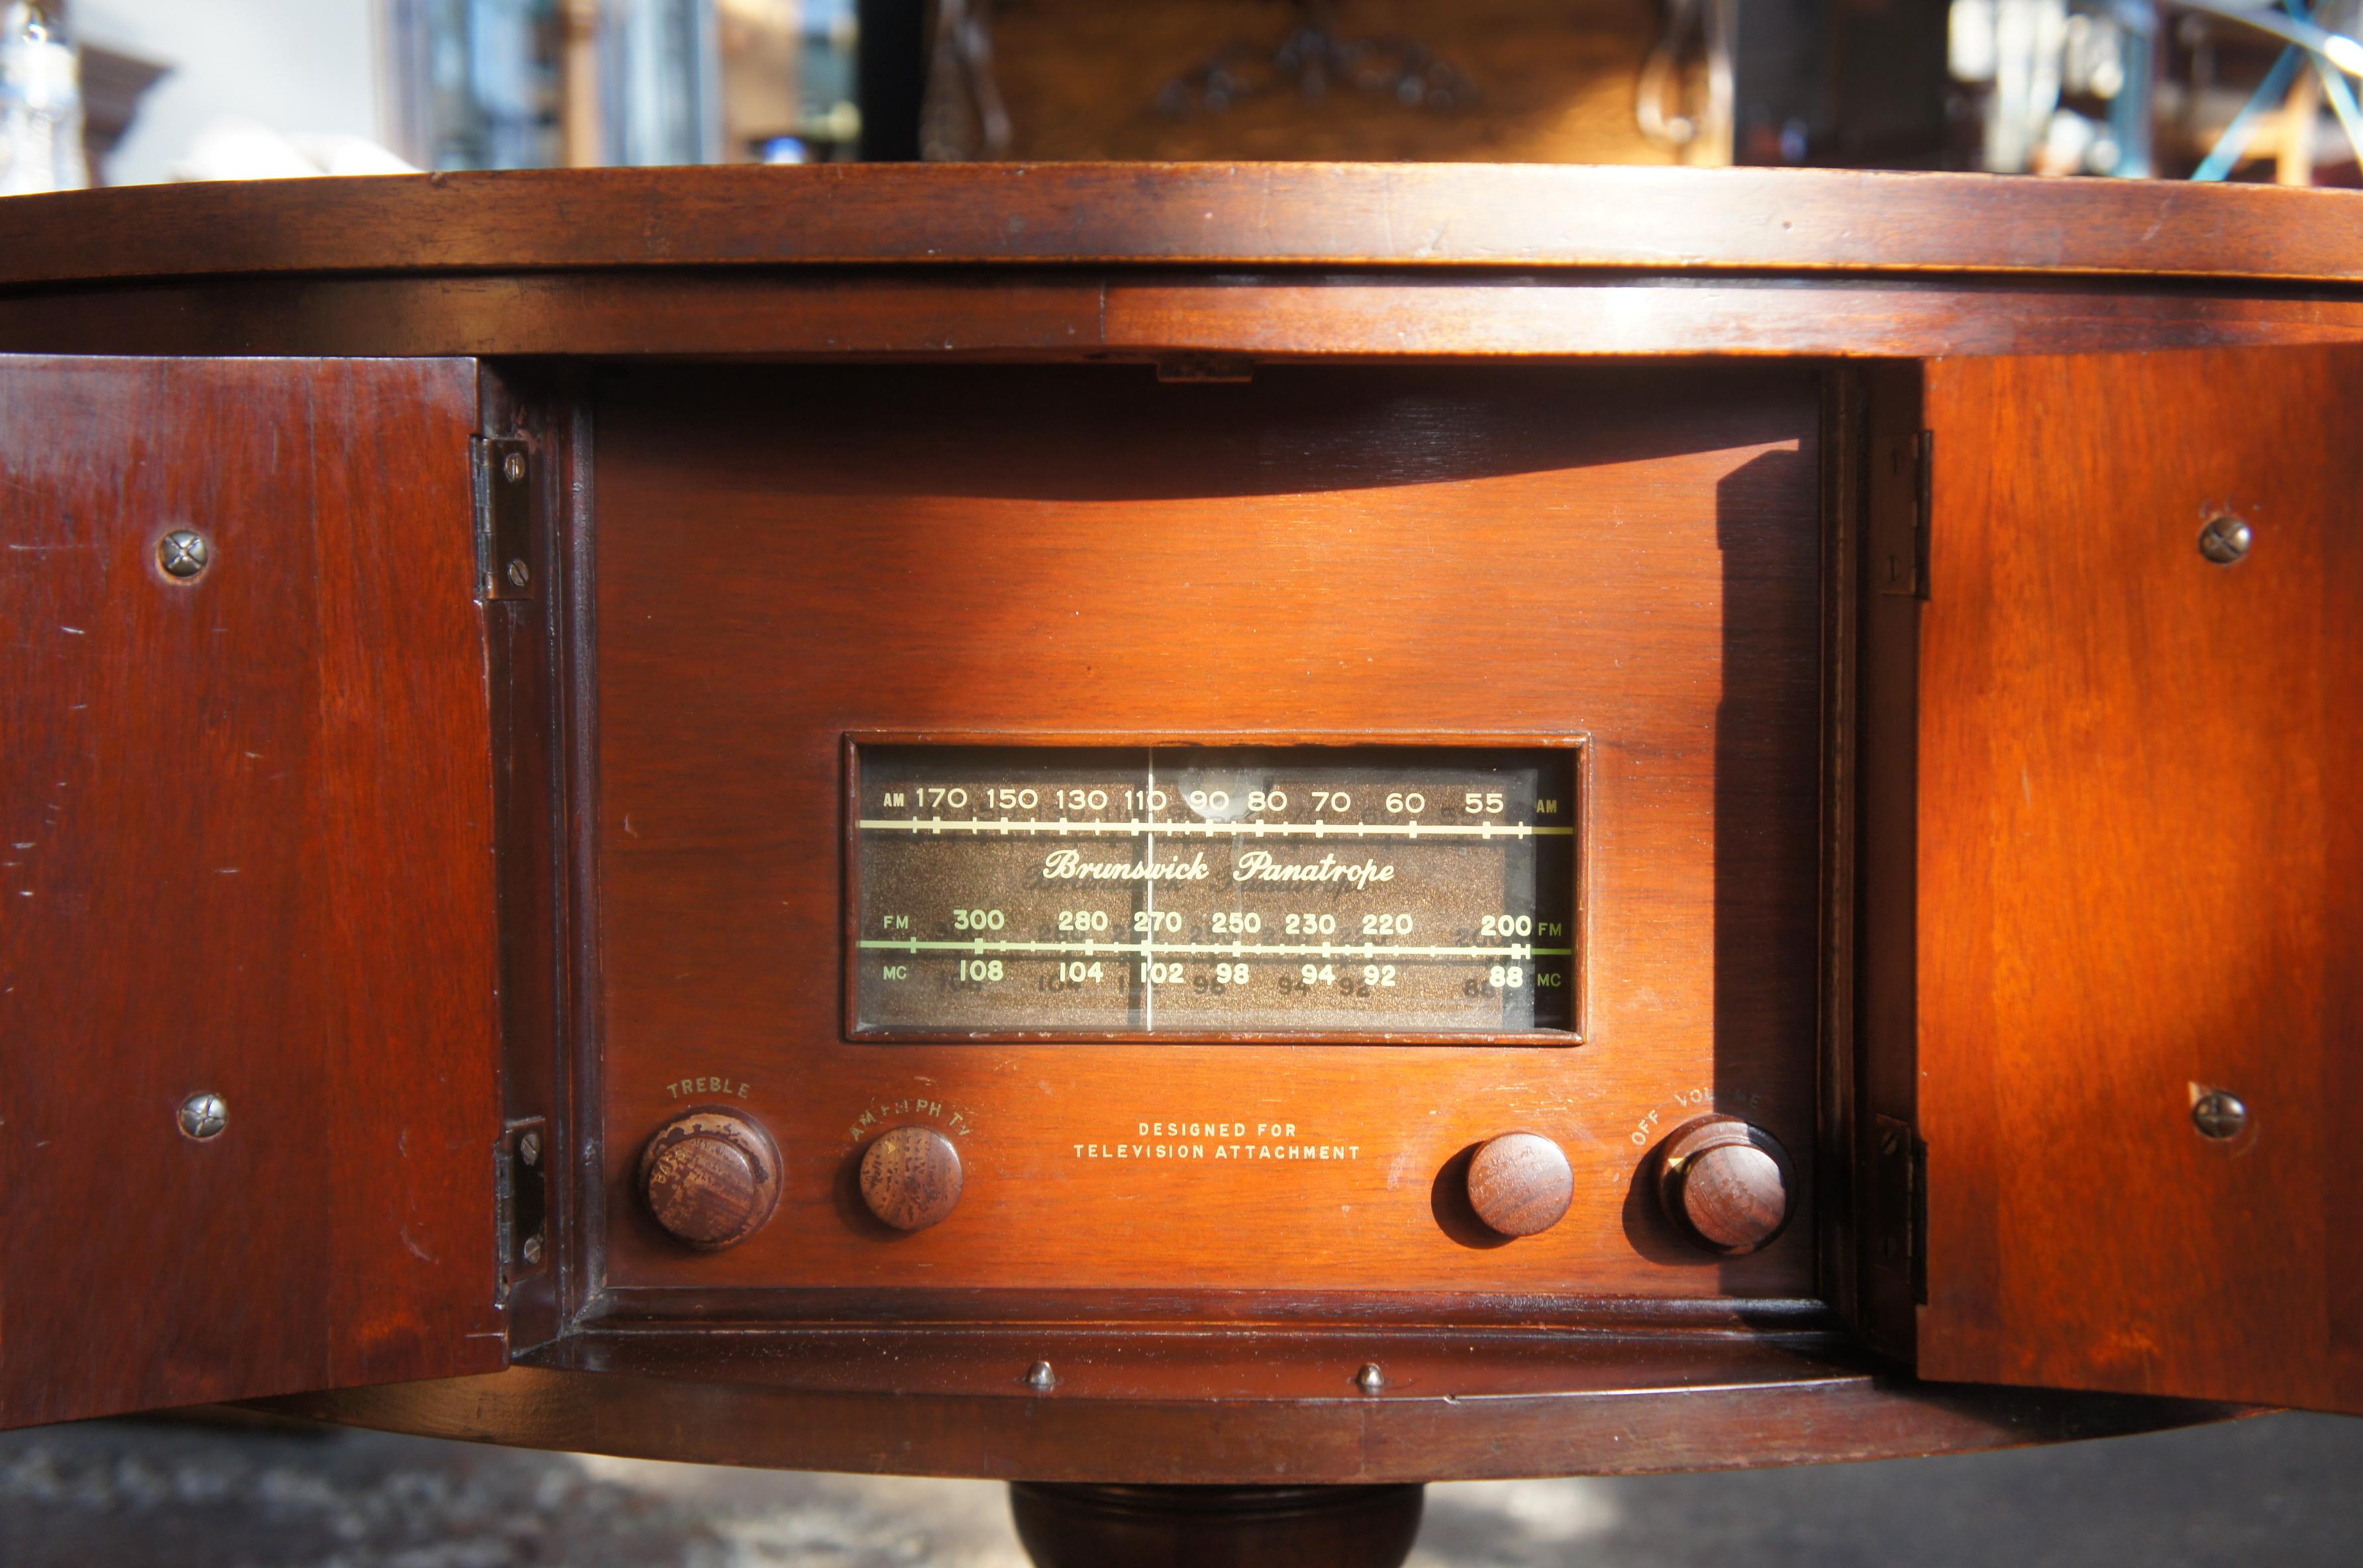 Brunswick Panatrope Trommeltisch Sheraton Duncan Phyfe Mahagoni Musik Radio, 1940er Jahre im Angebot 3